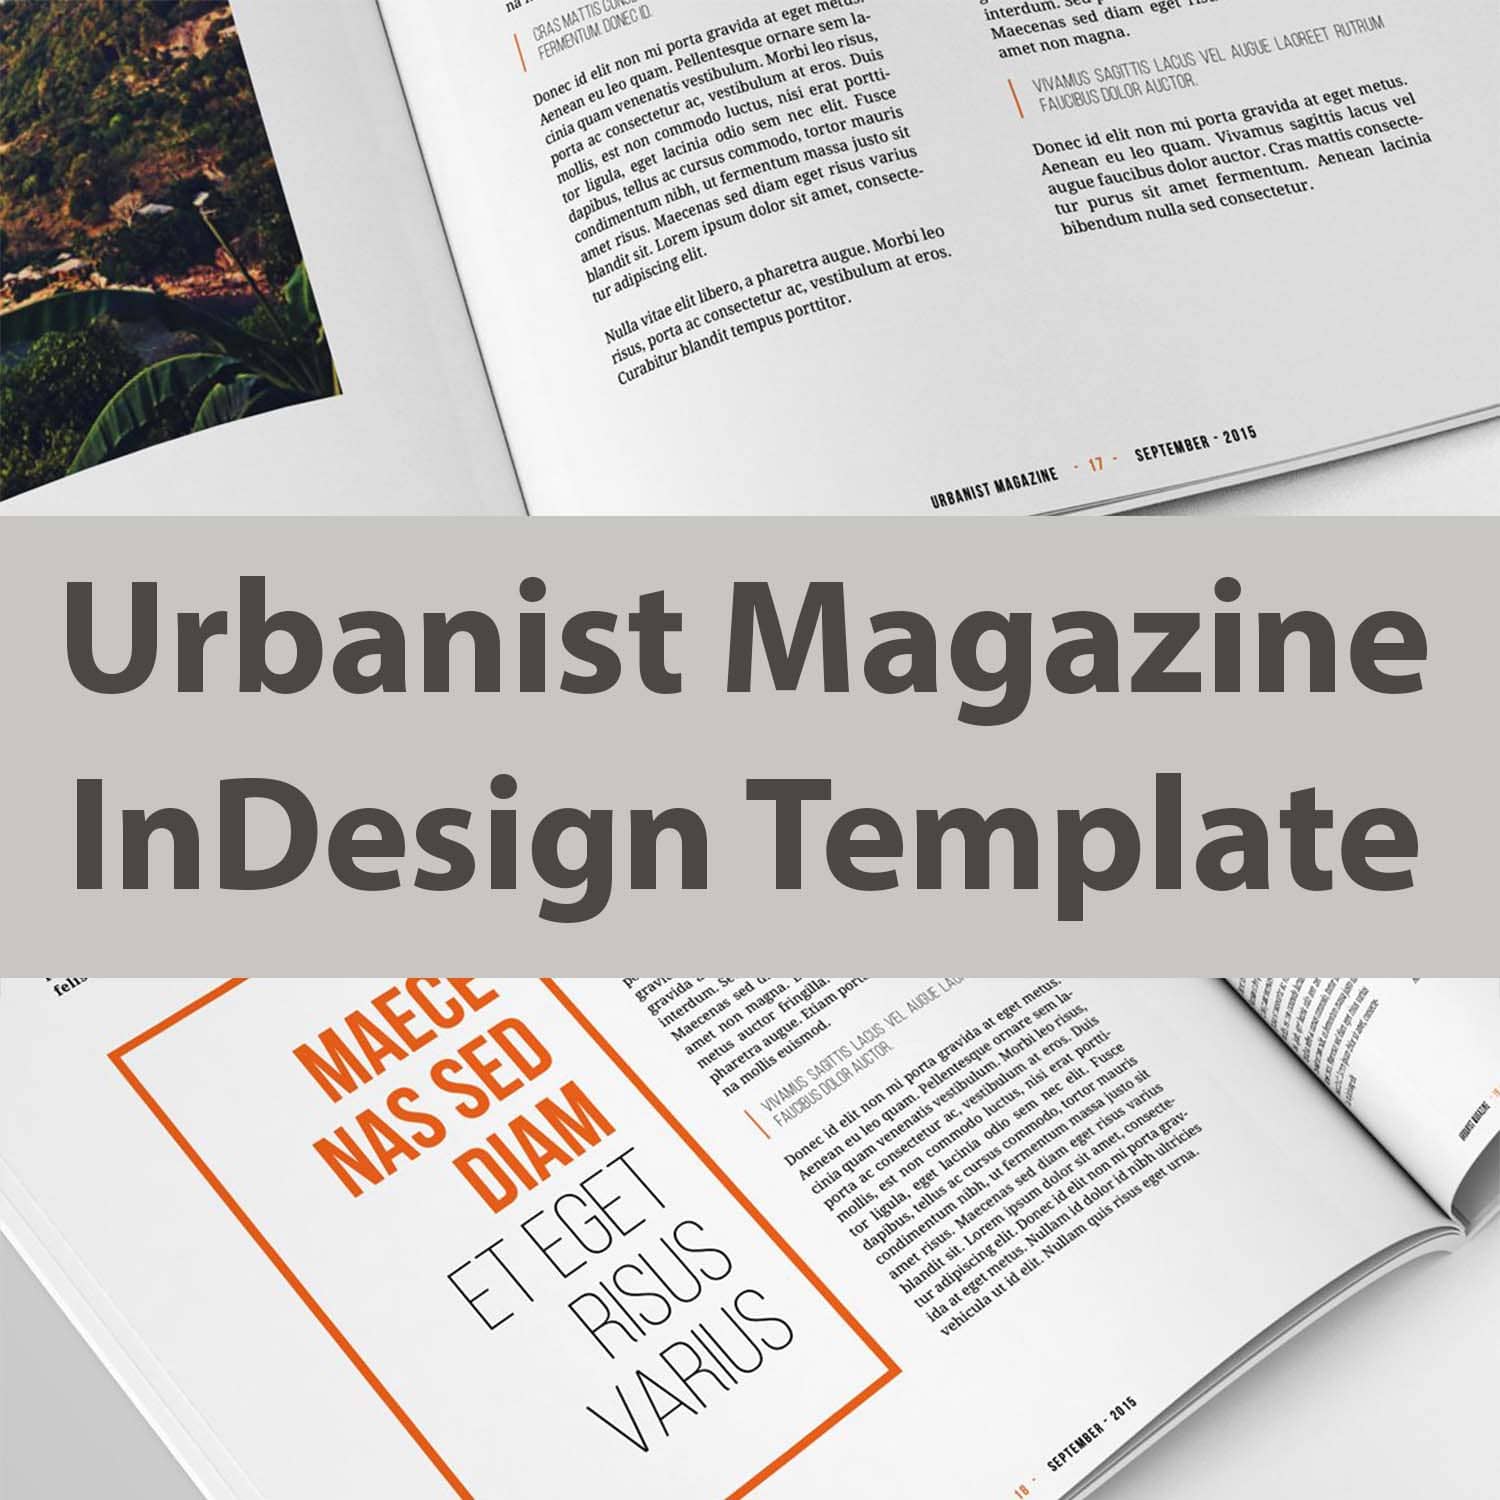 urbanist magazine indesign template cover image.